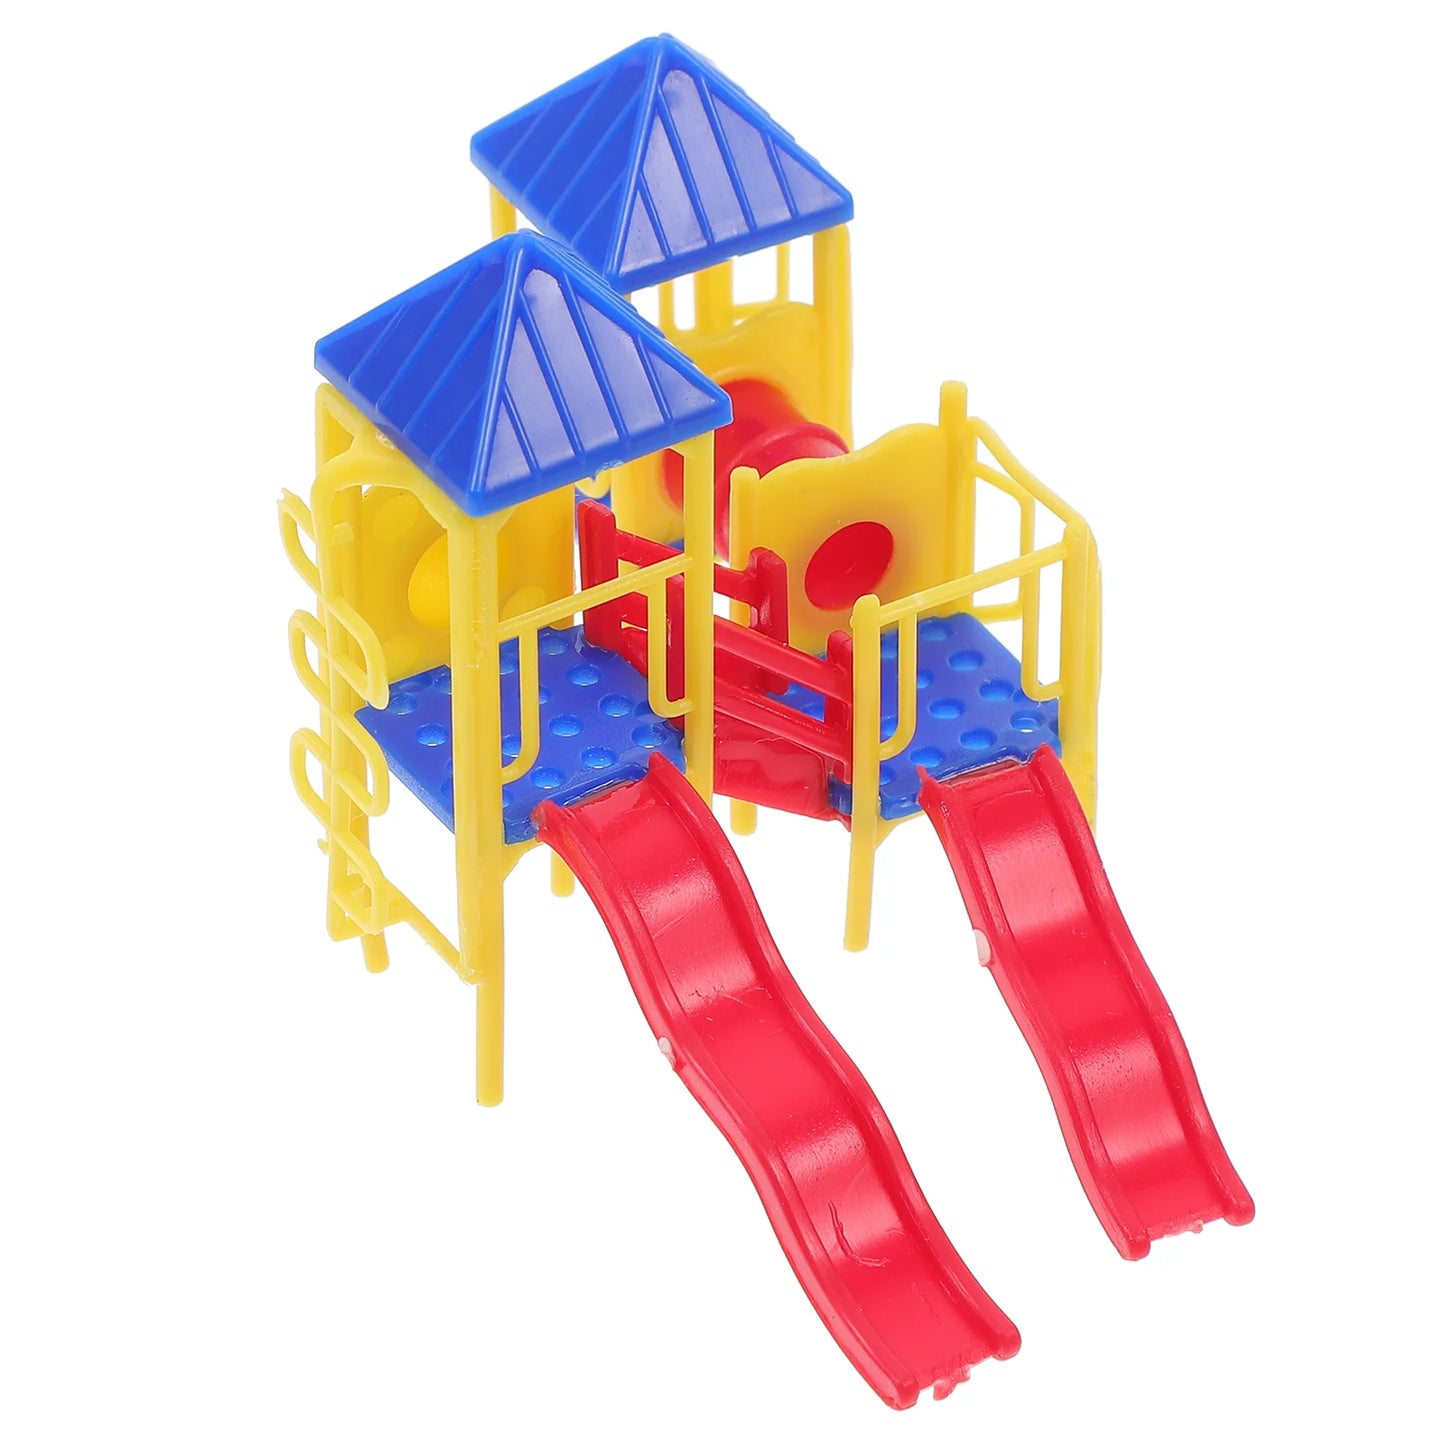 Miniature Playground Dollhouse Decor Set